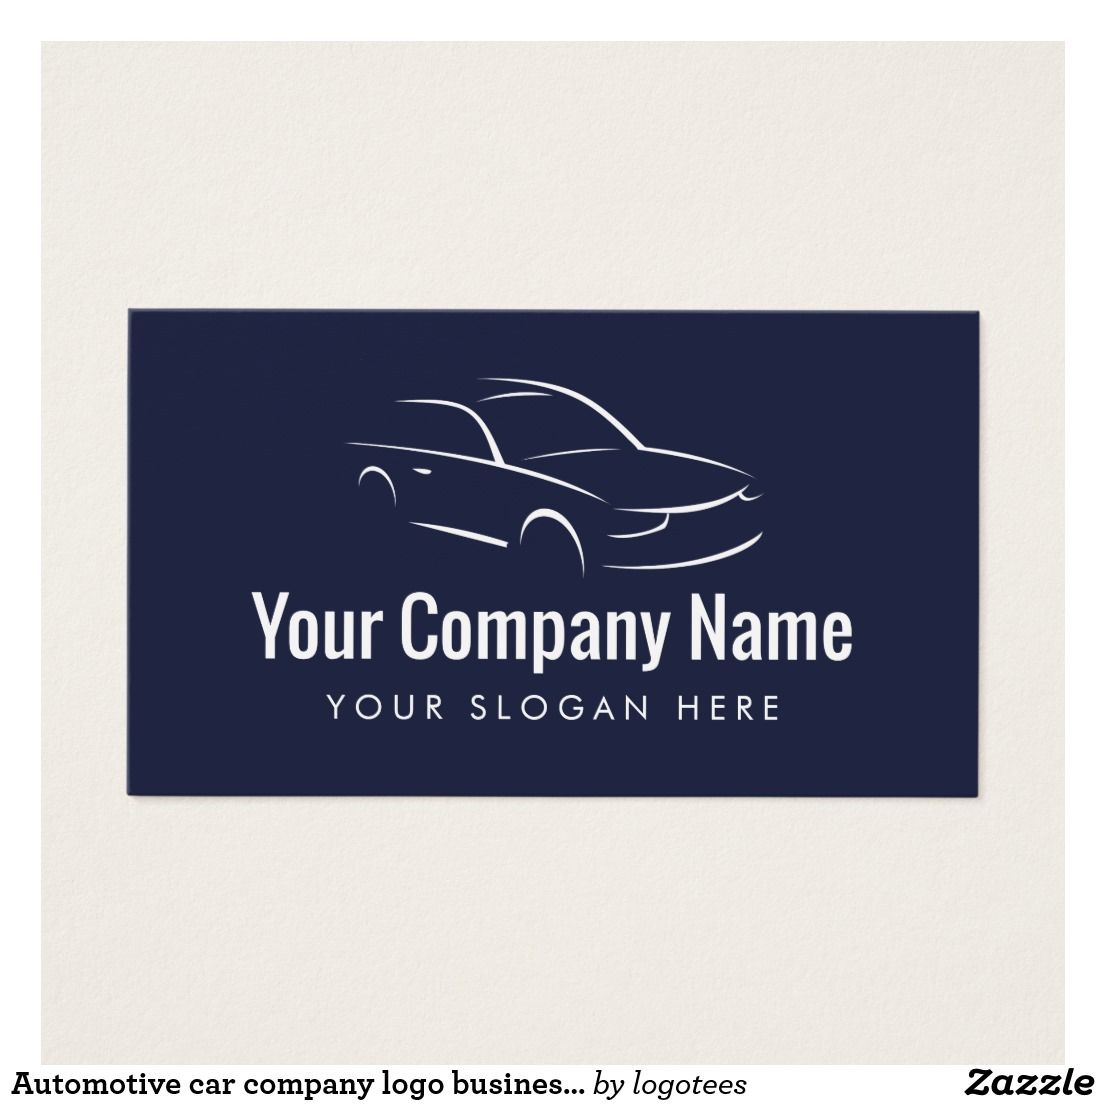 Automotive Car Company Logo Business Card Template | Zazzle With Automotive Business Card Templates